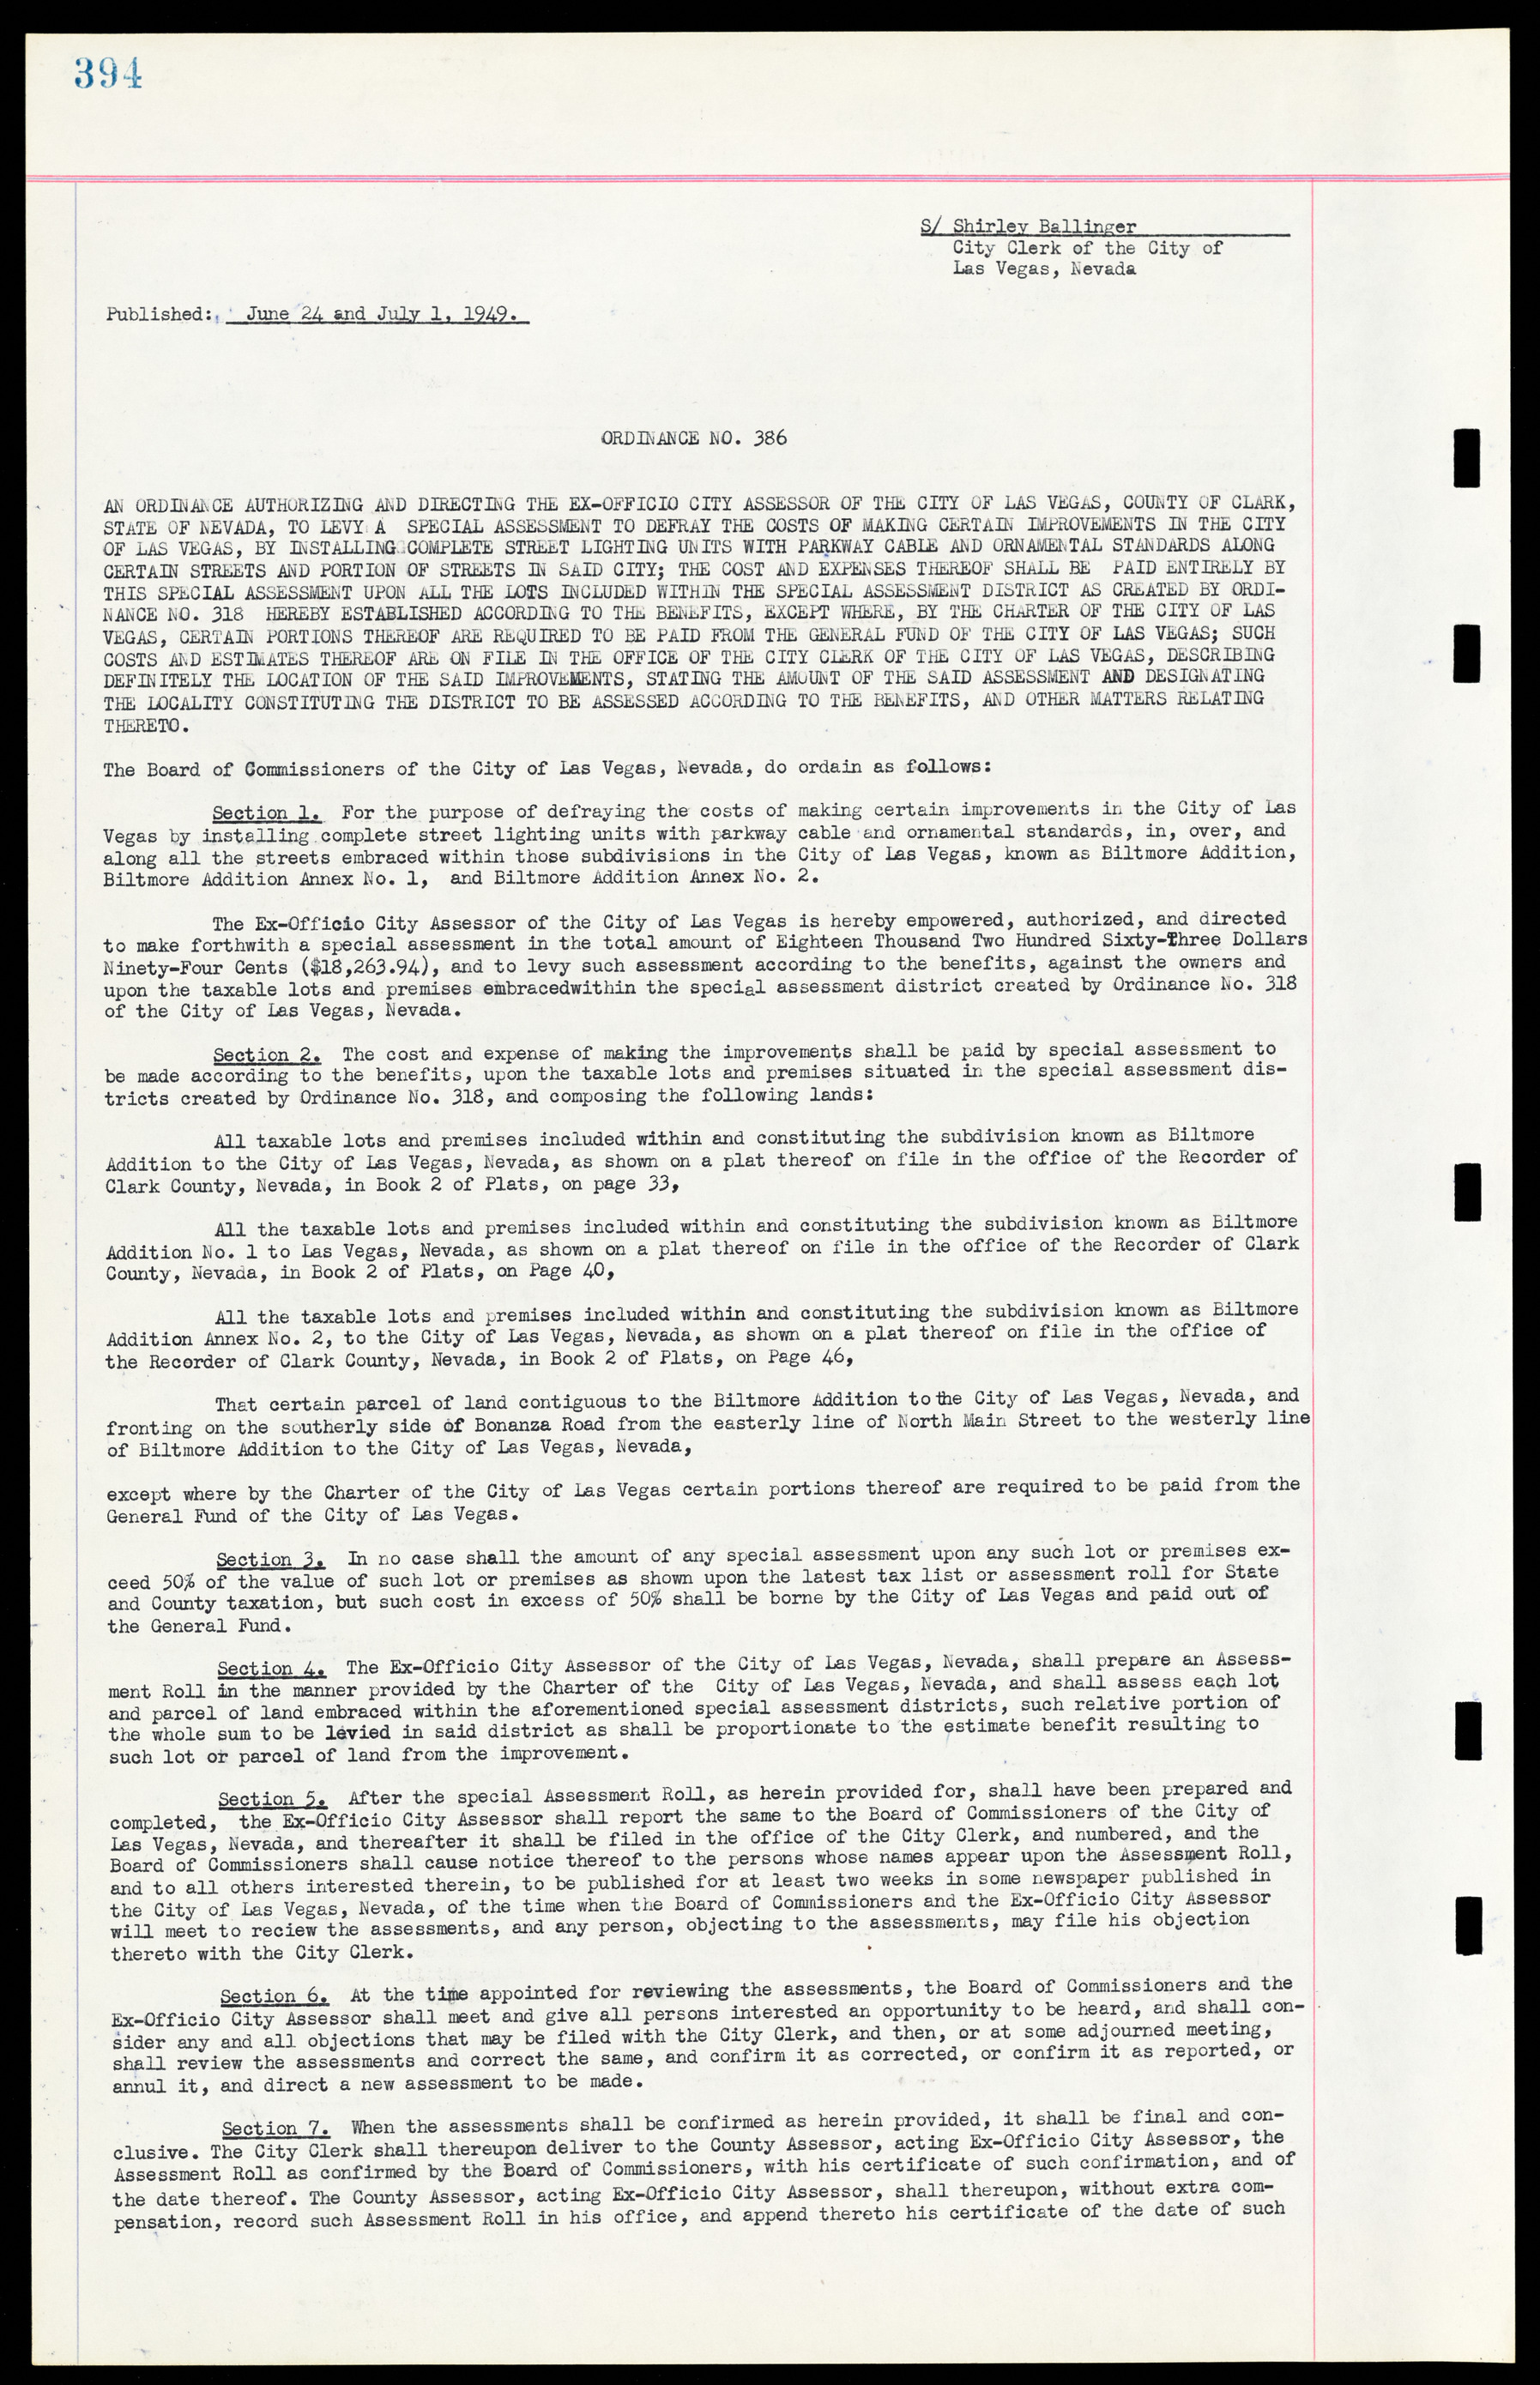 Las Vegas City Ordinances, March 31, 1933 to October 25, 1950, lvc000014-423